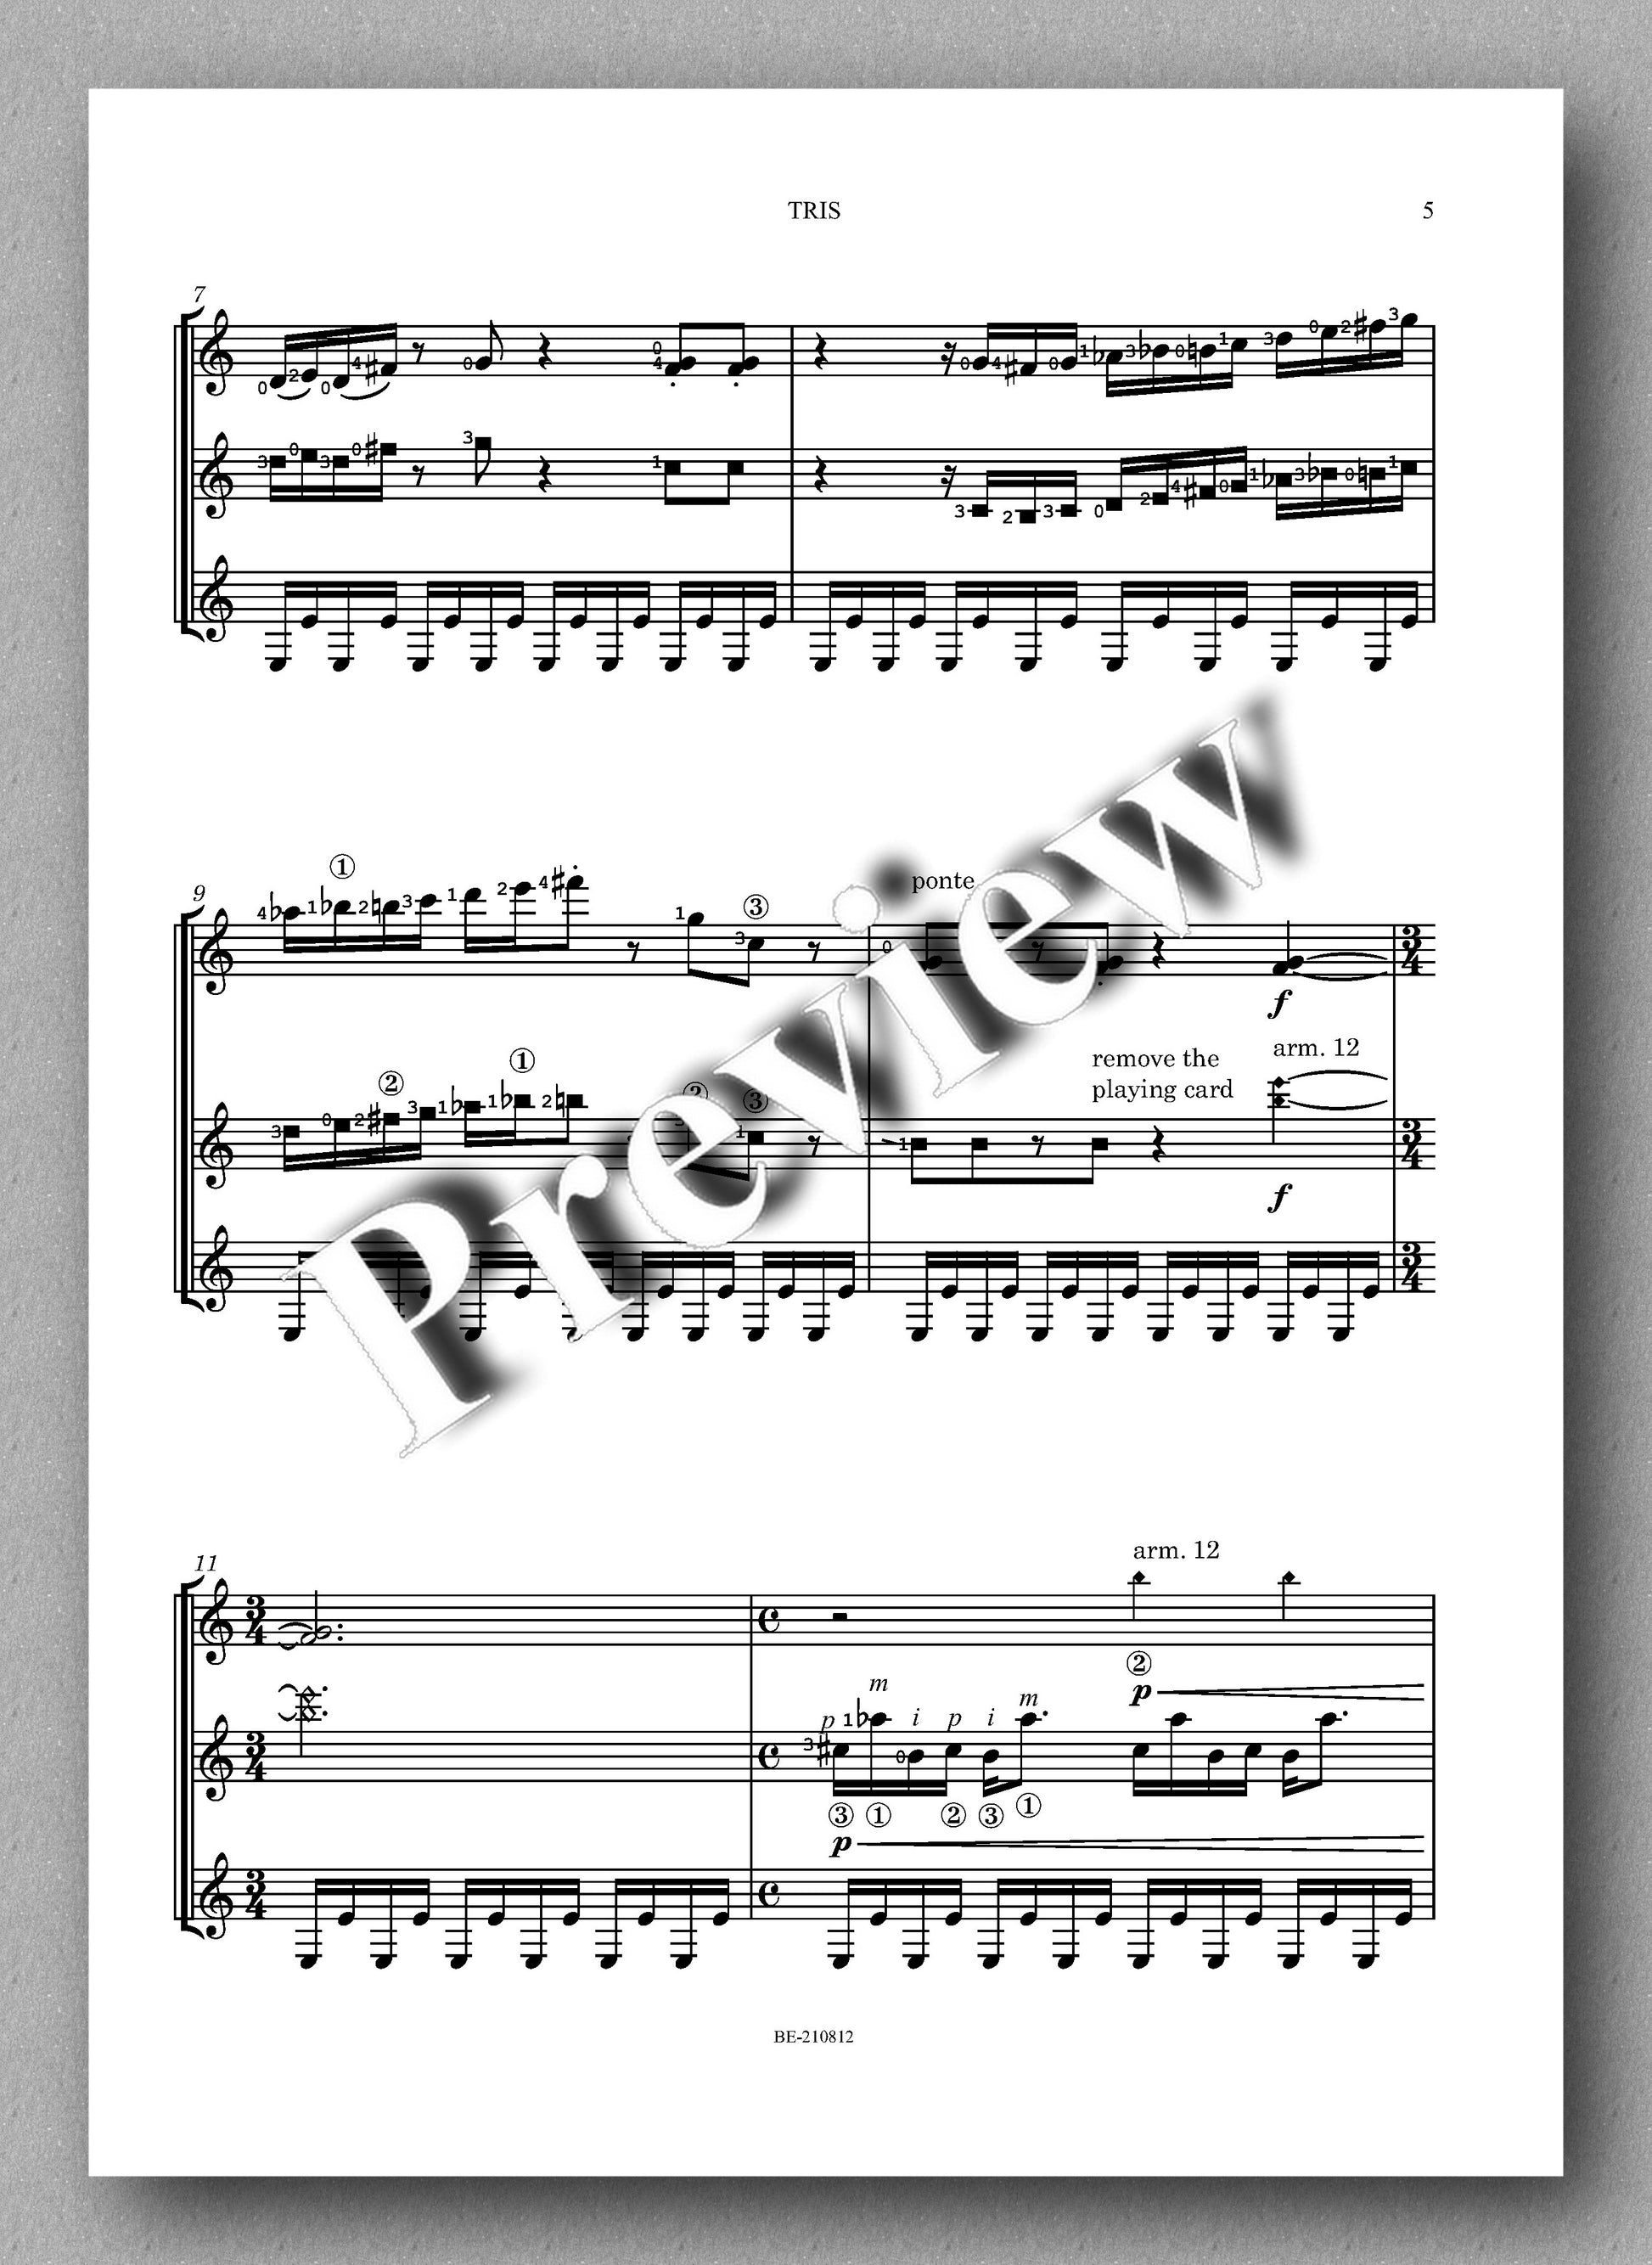 Giannoni, Tris - music score 2